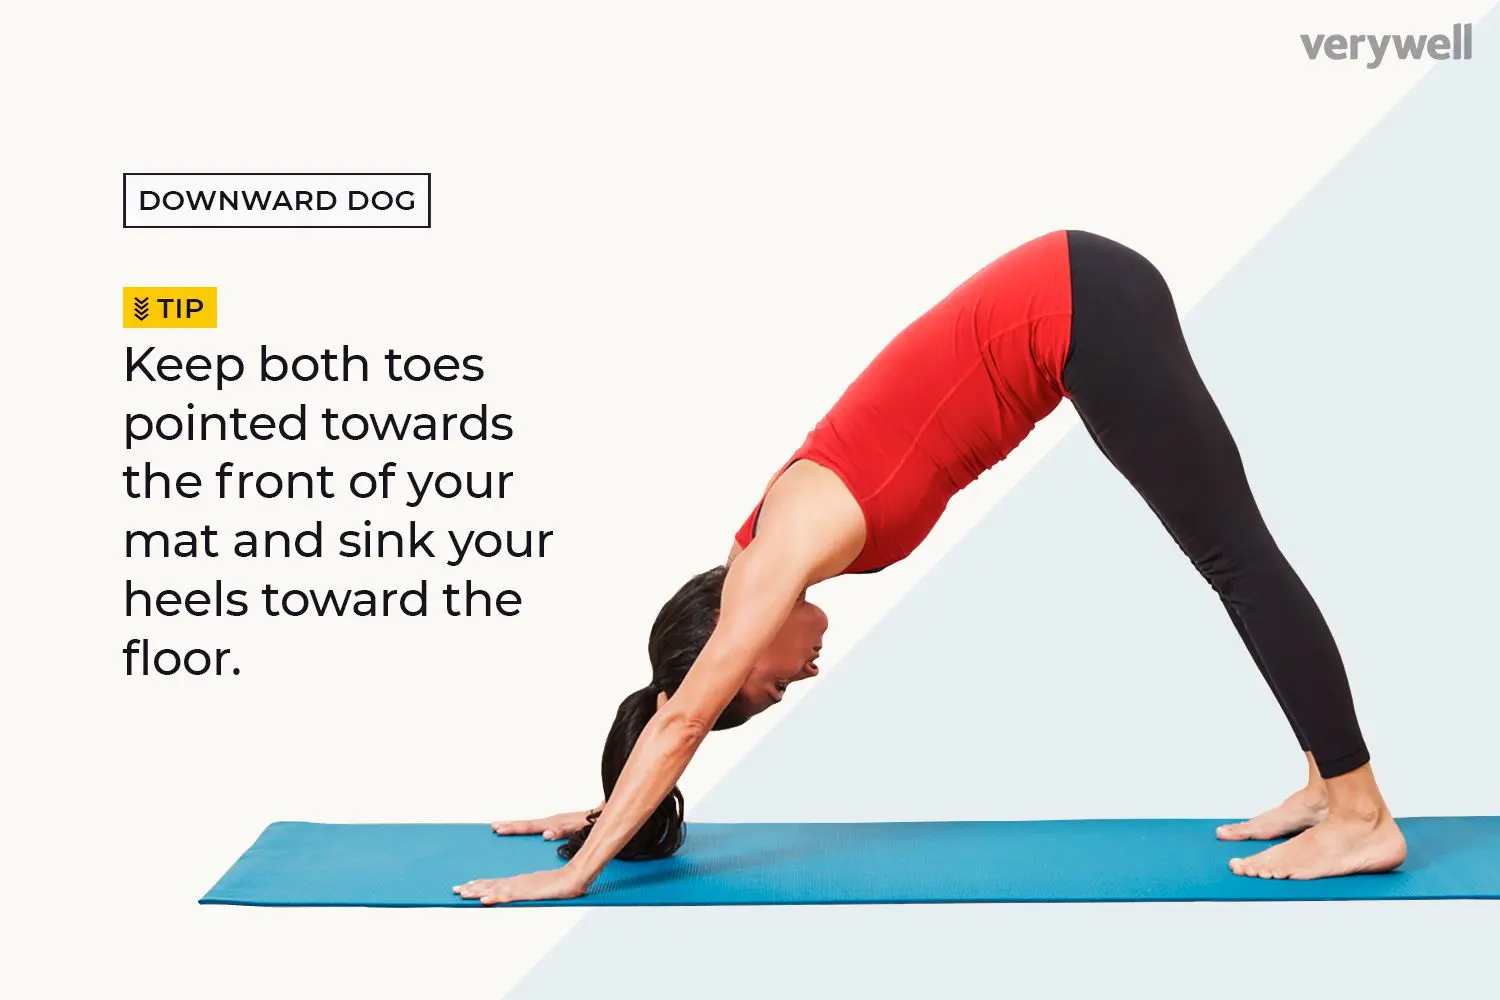 downward dog yoga pose - What are the disadvantages of downward dog pose